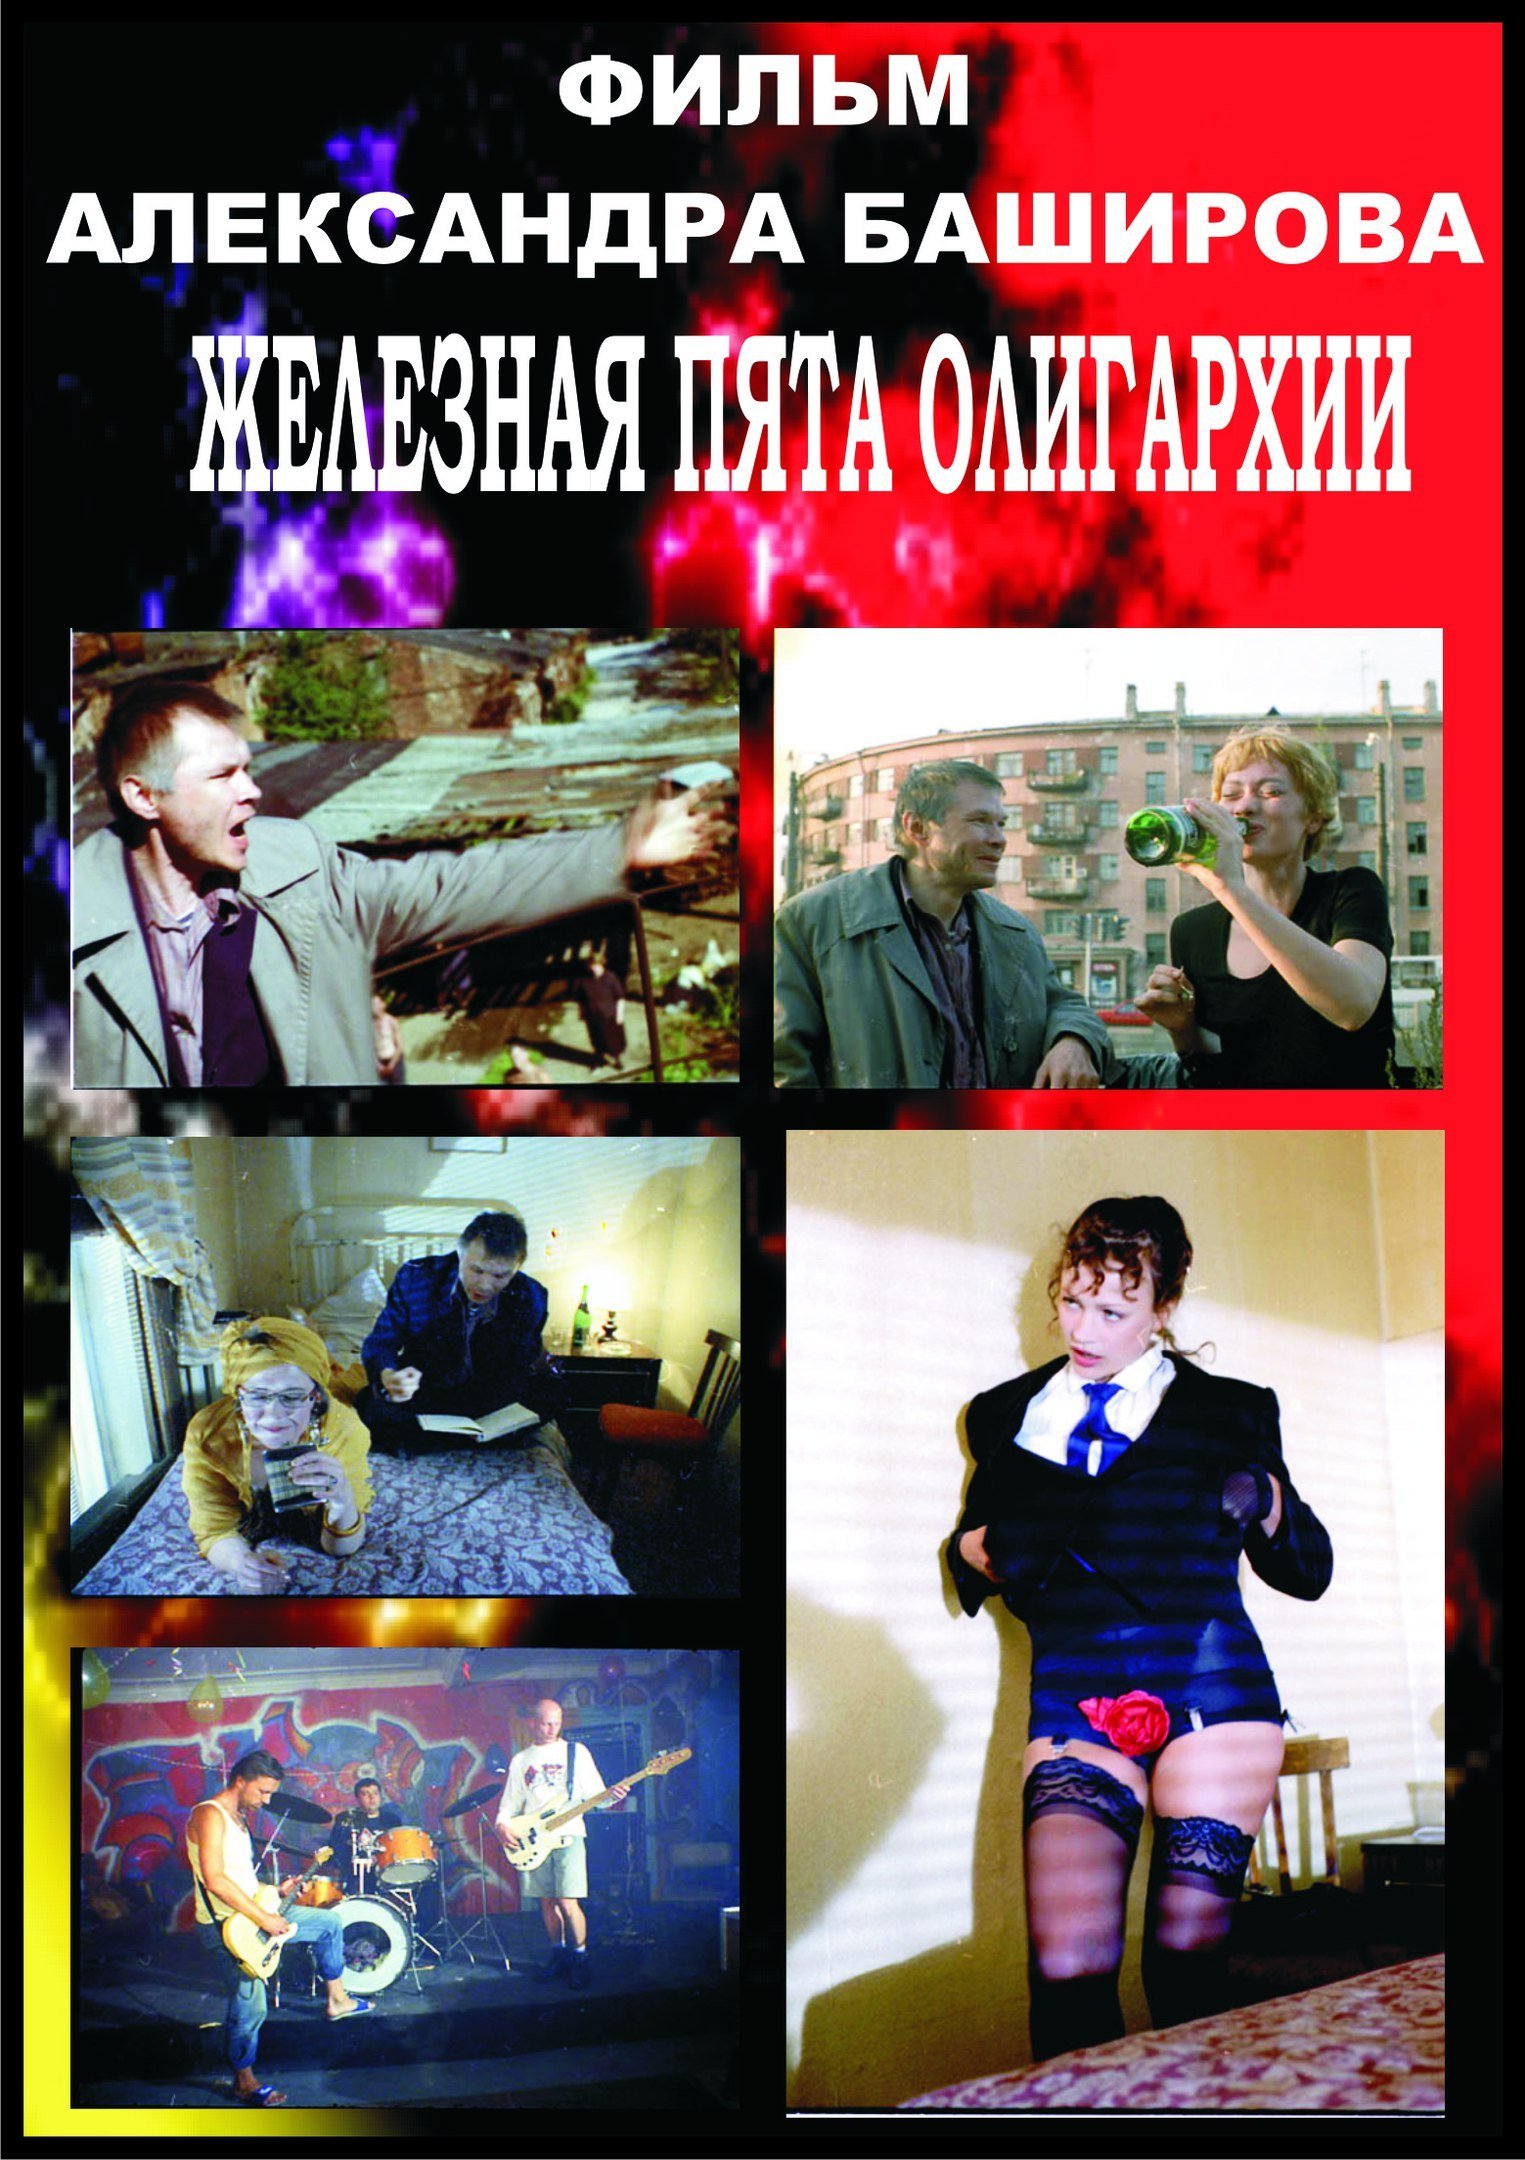 Zheleznaya pyata oligarkhii (1998) with English Subtitles on DVD on DVD